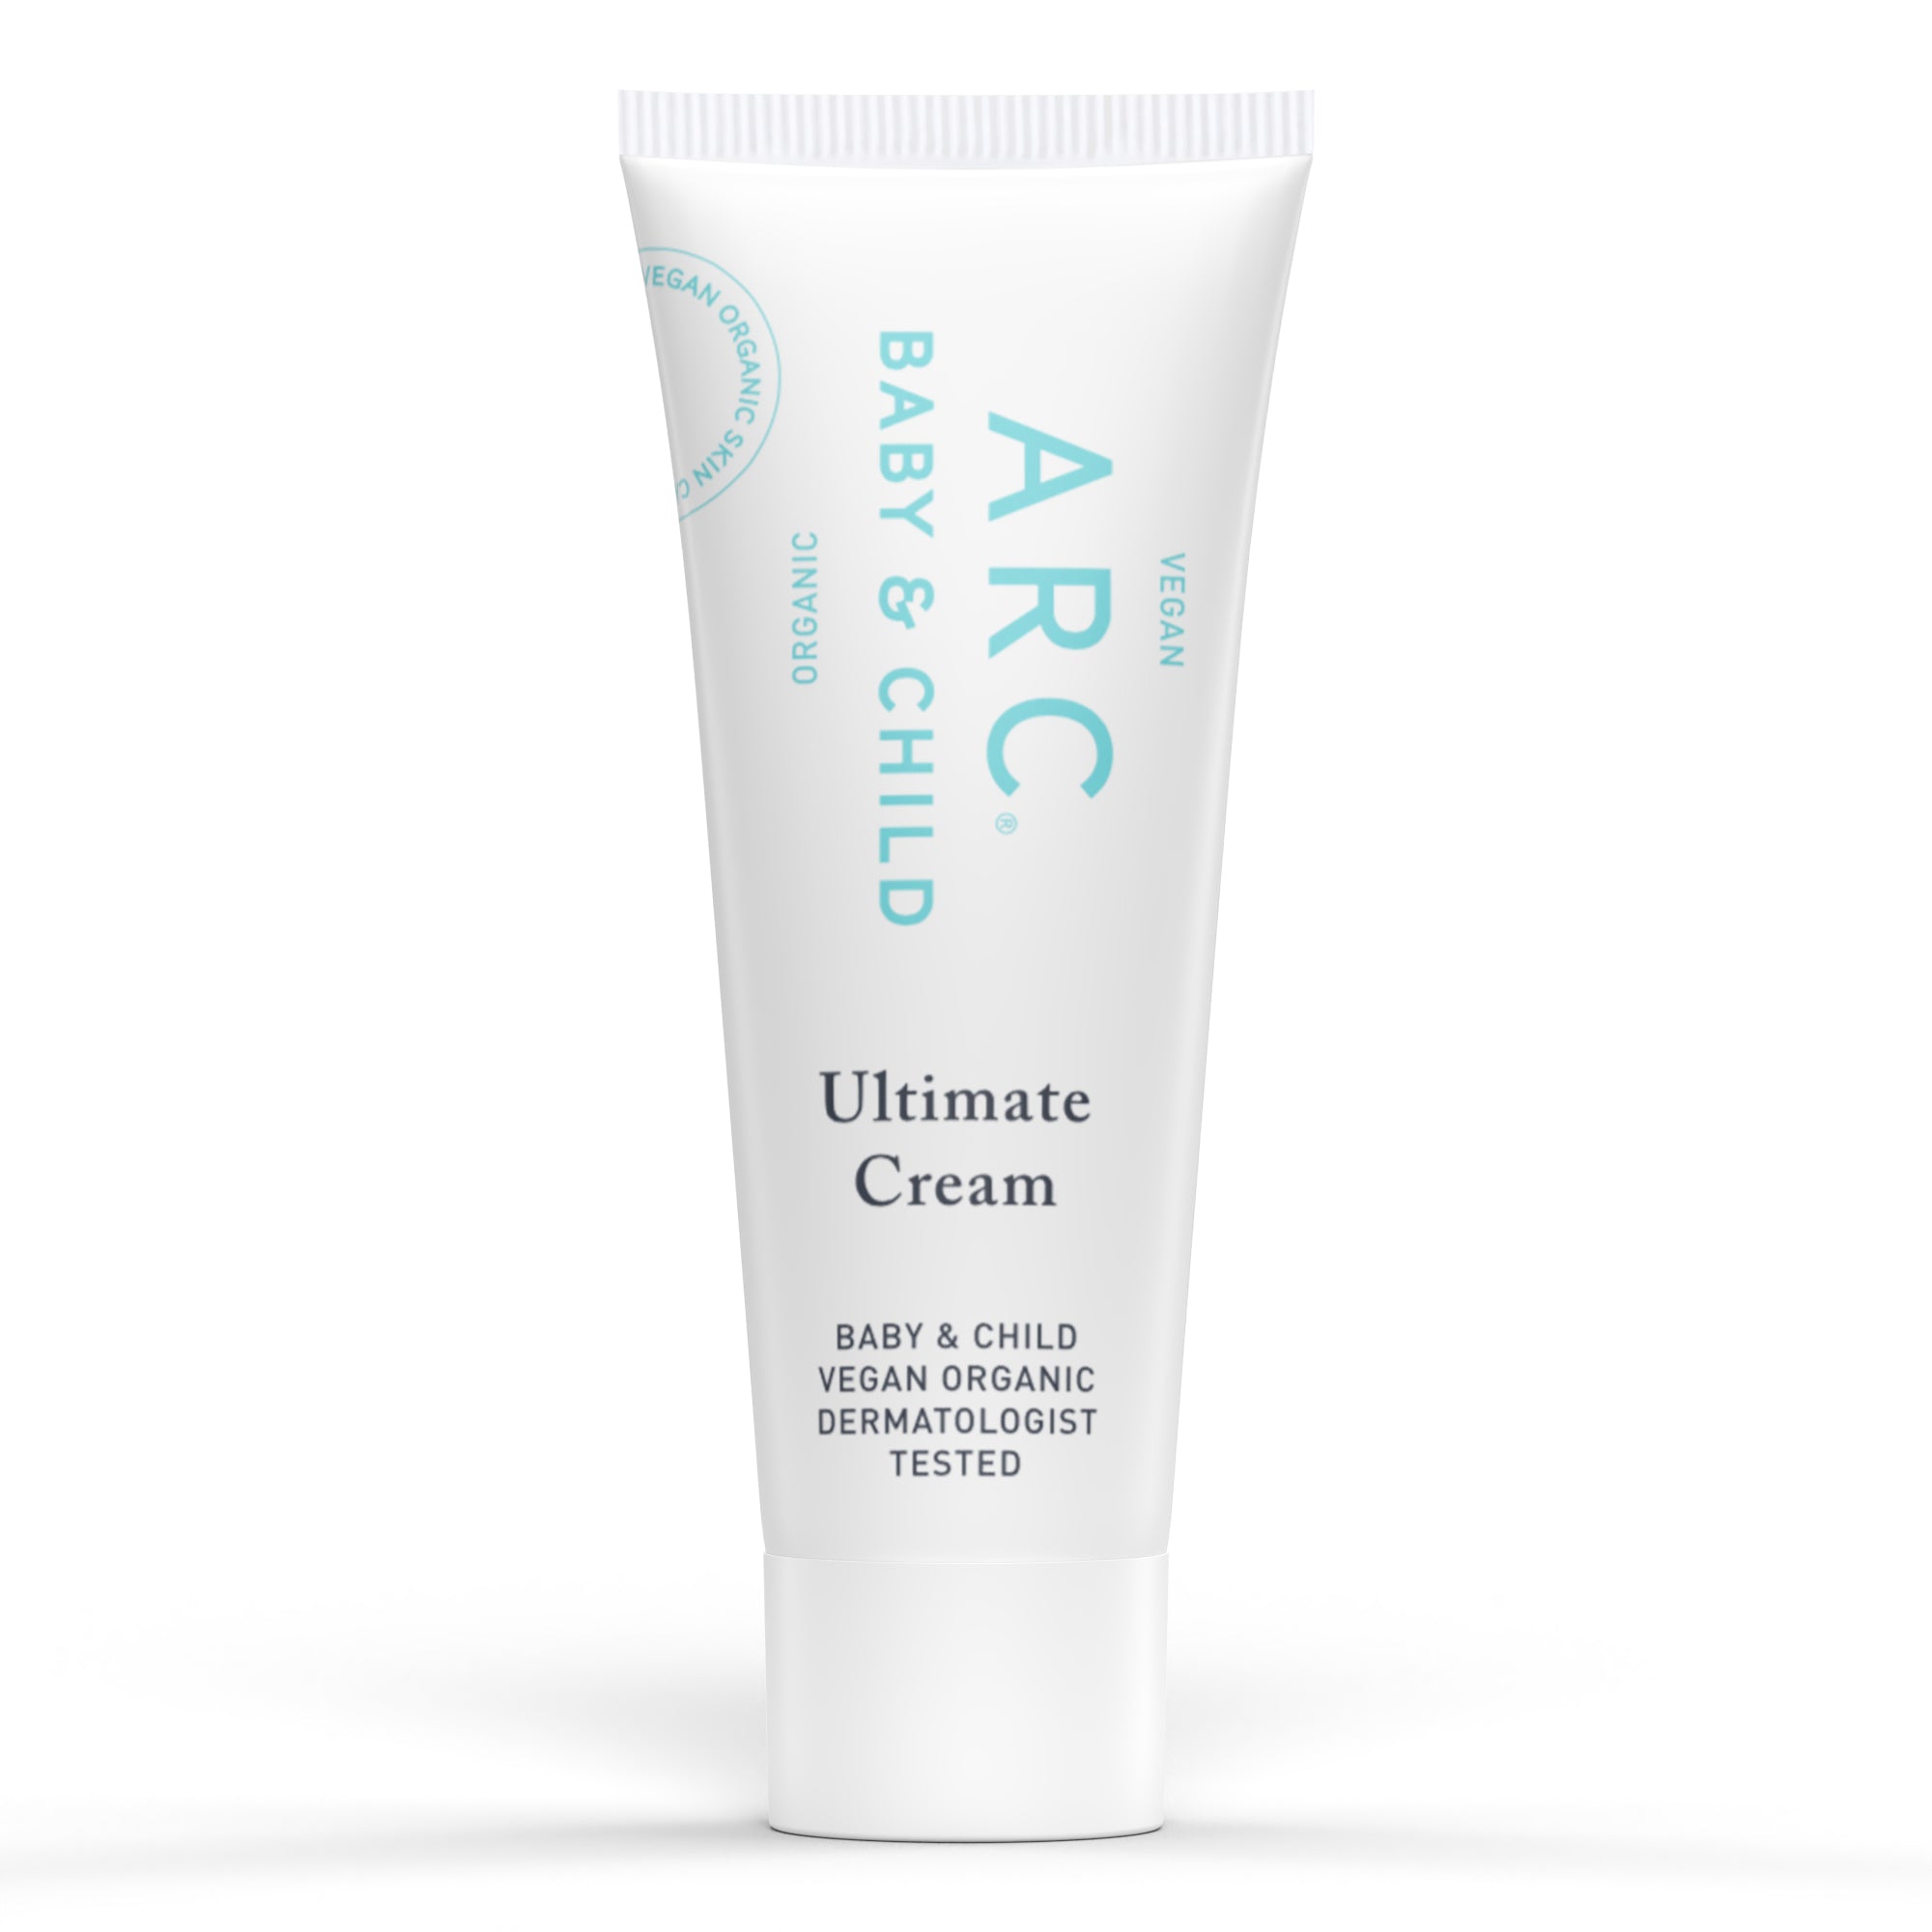 Produktbild ultimate cream